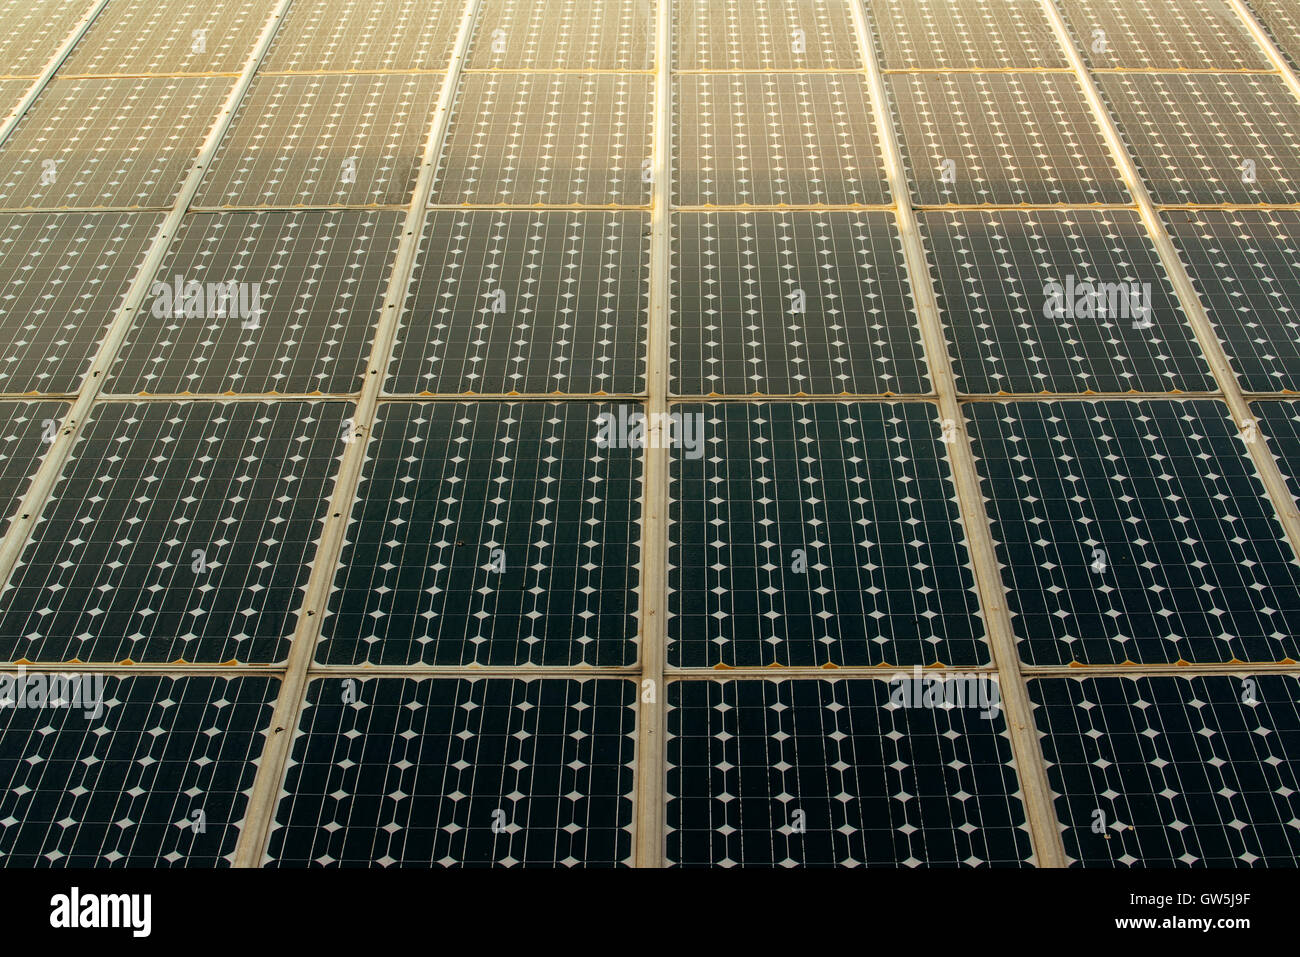 Sunlight on solar panels photovoltaic cell modules Stock Photo